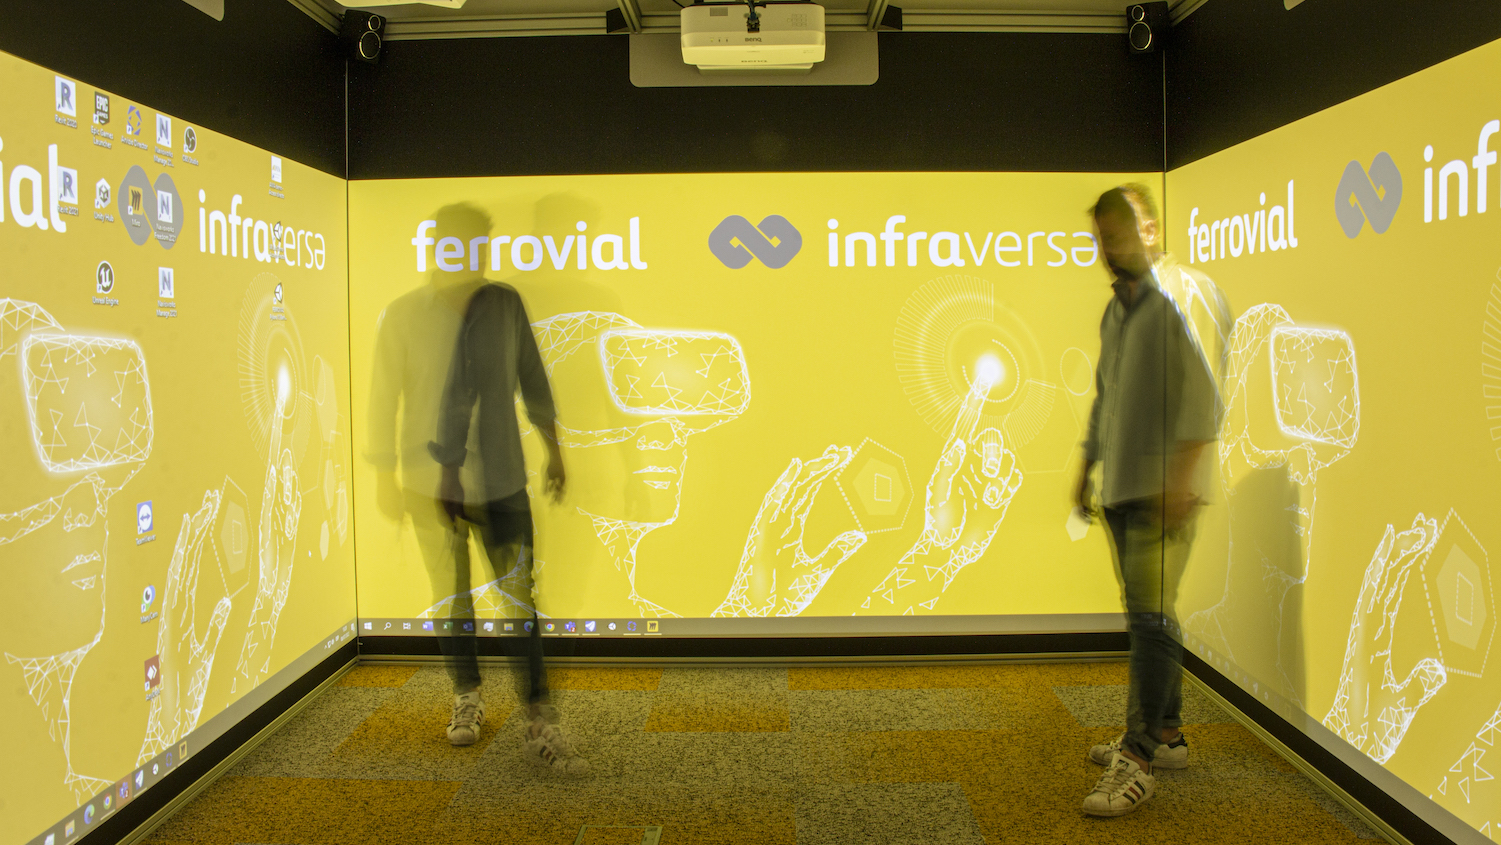 Ferrovial's Infraverse-lab